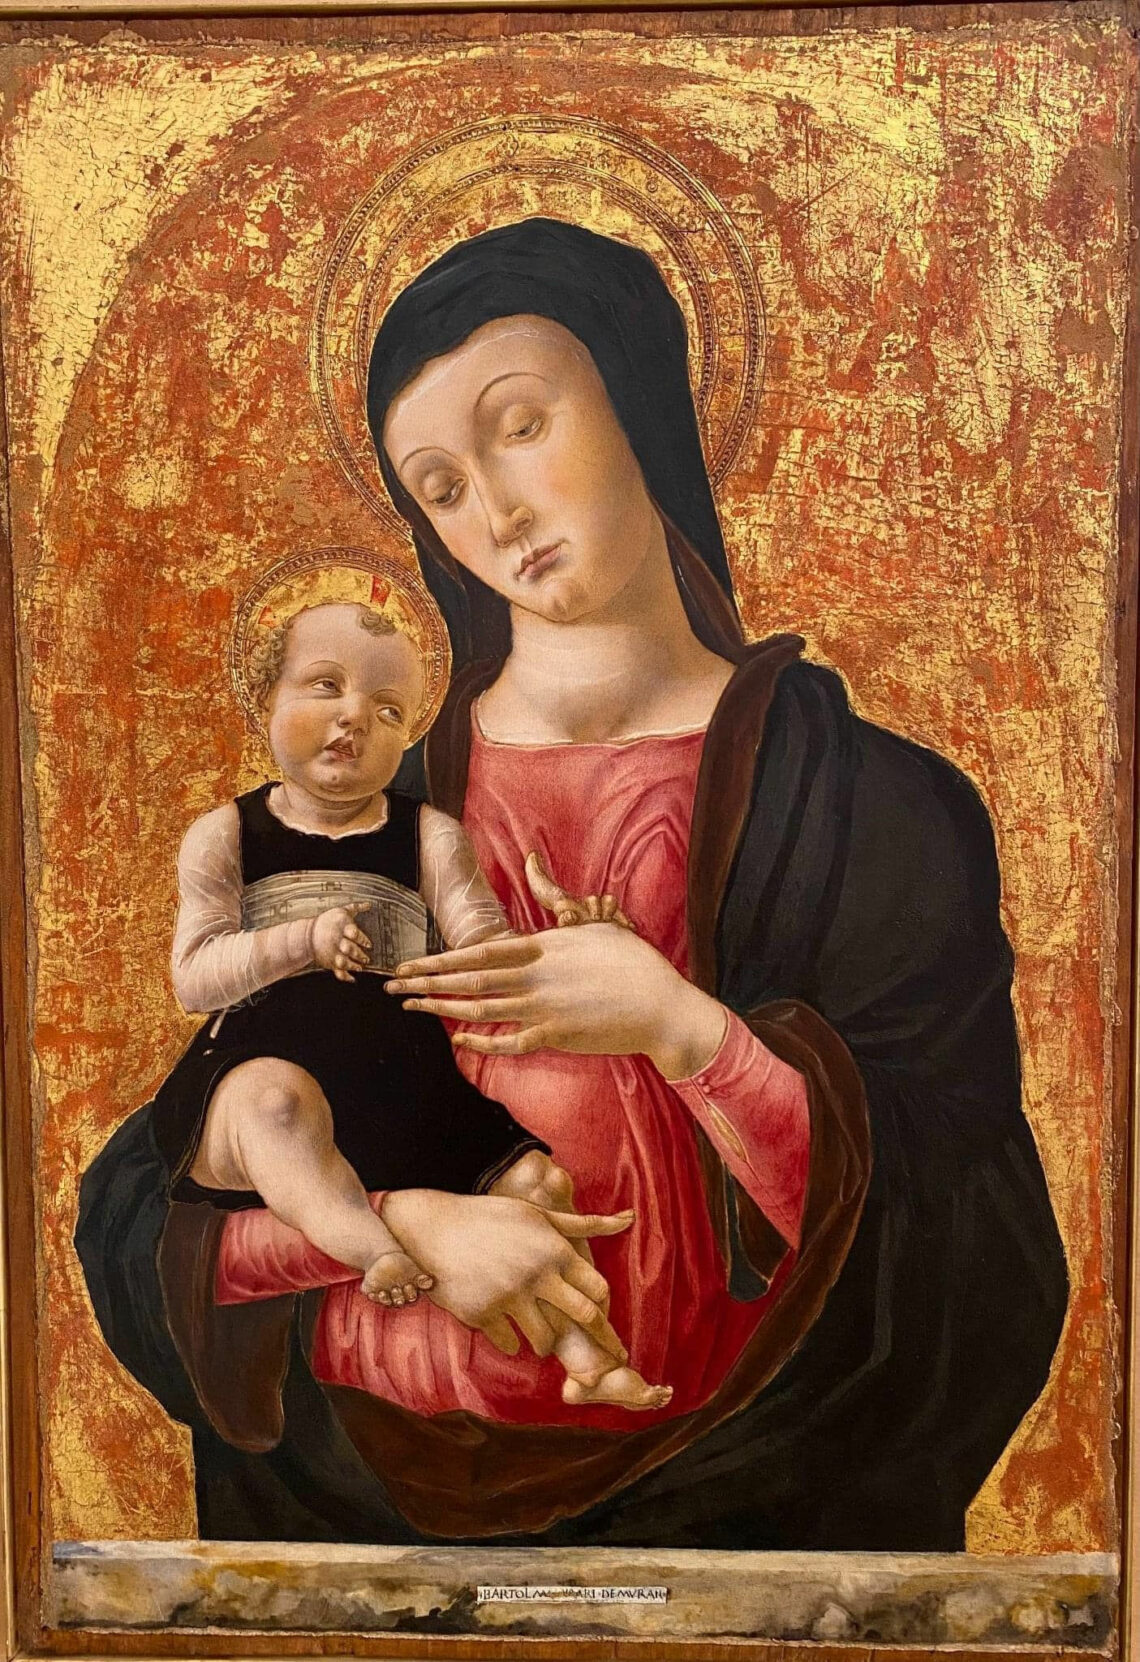 Bartolomeo Vivarini "Madonna col Bambino", Museo Correr, Venezia.